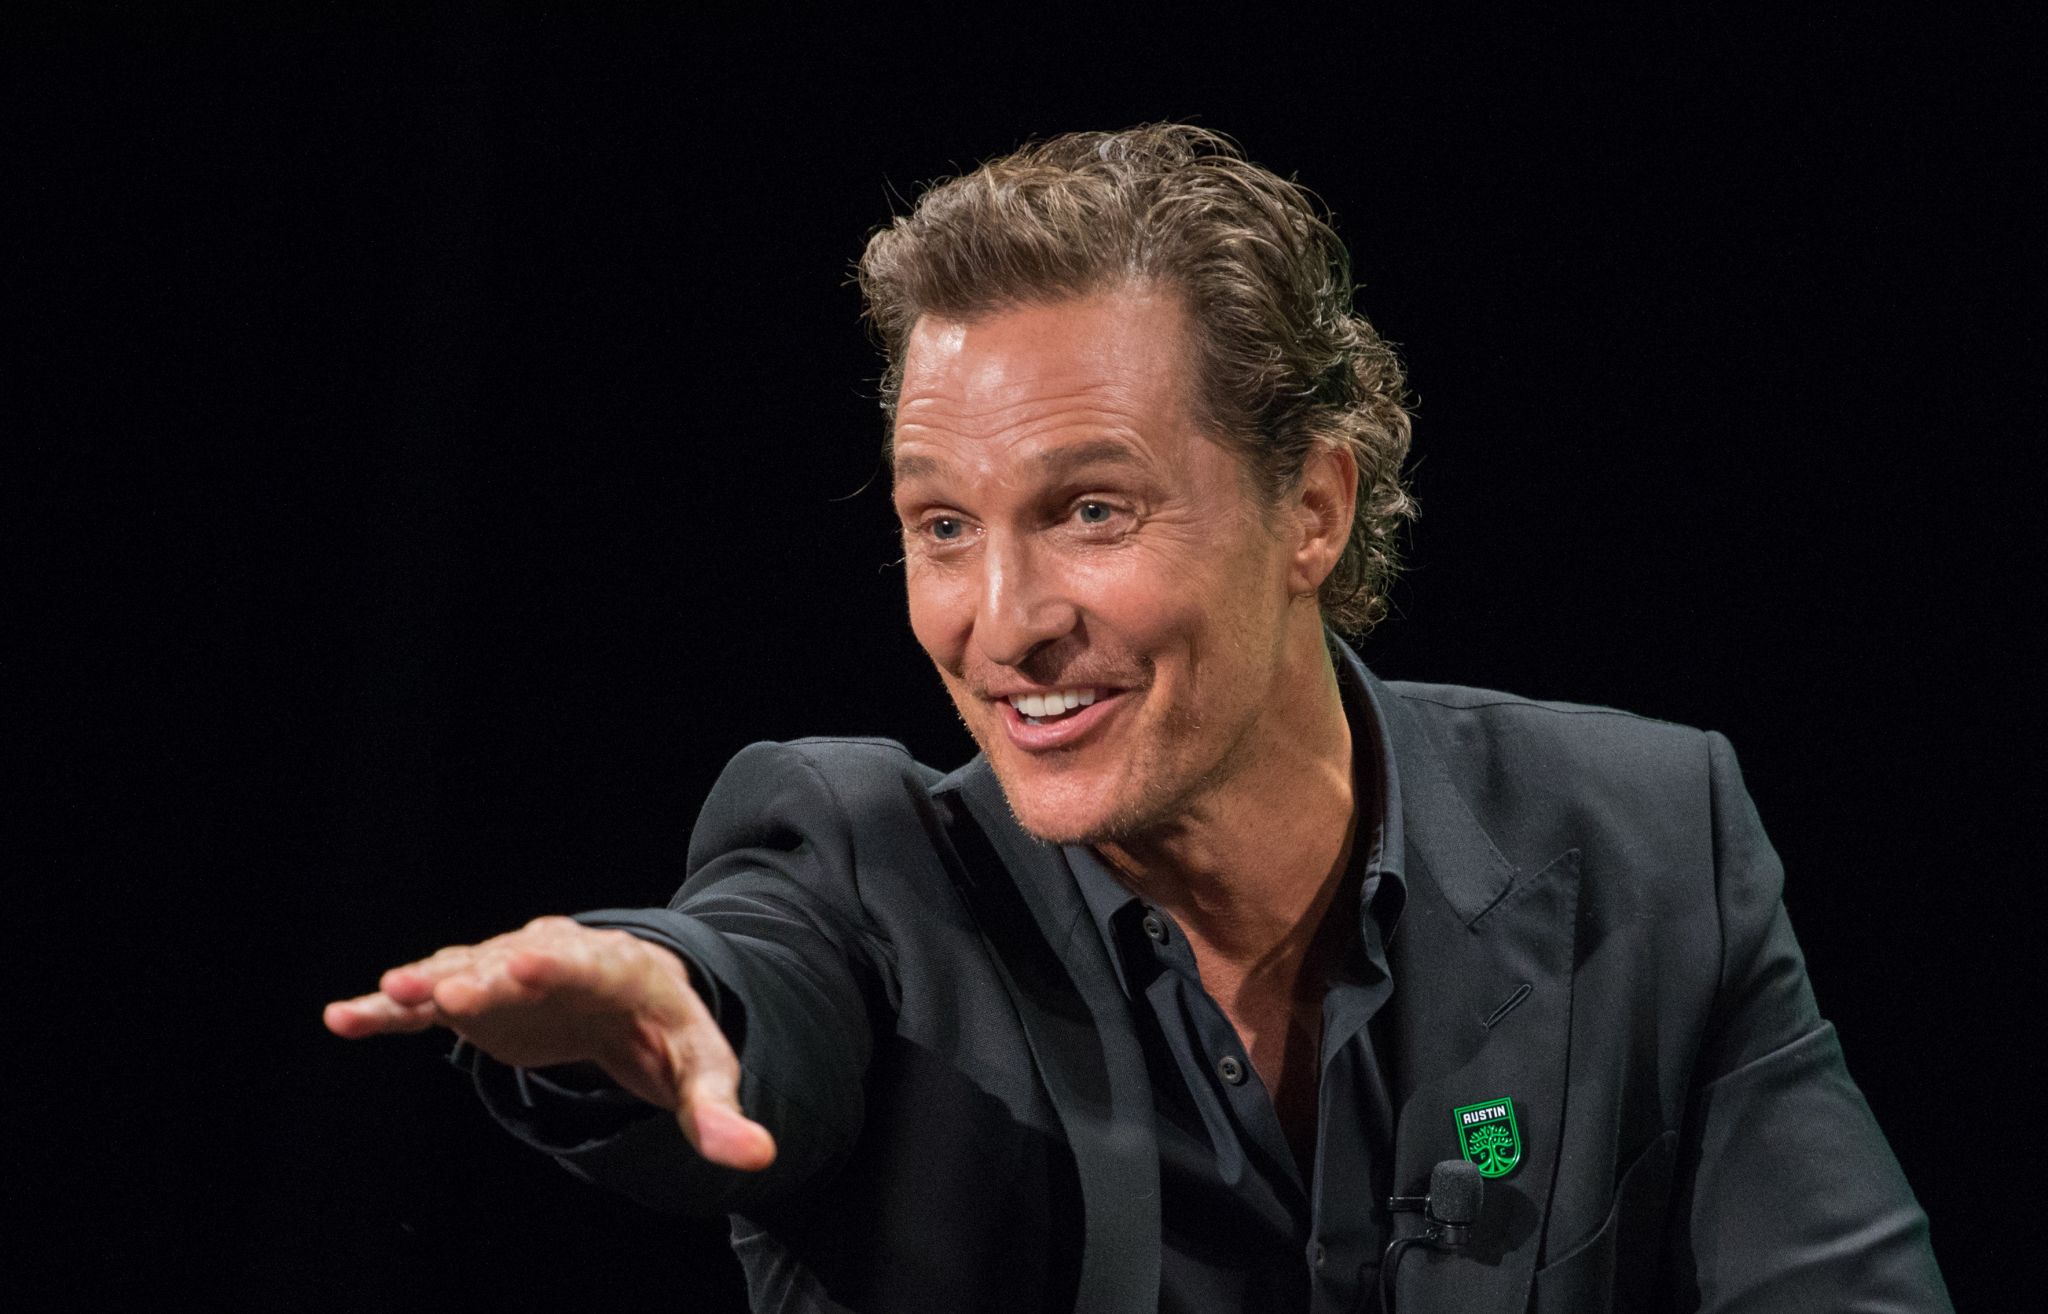 Matthew McConaughey rumored to star in ‘The Batman’ premiering in 2021 - Chron.com